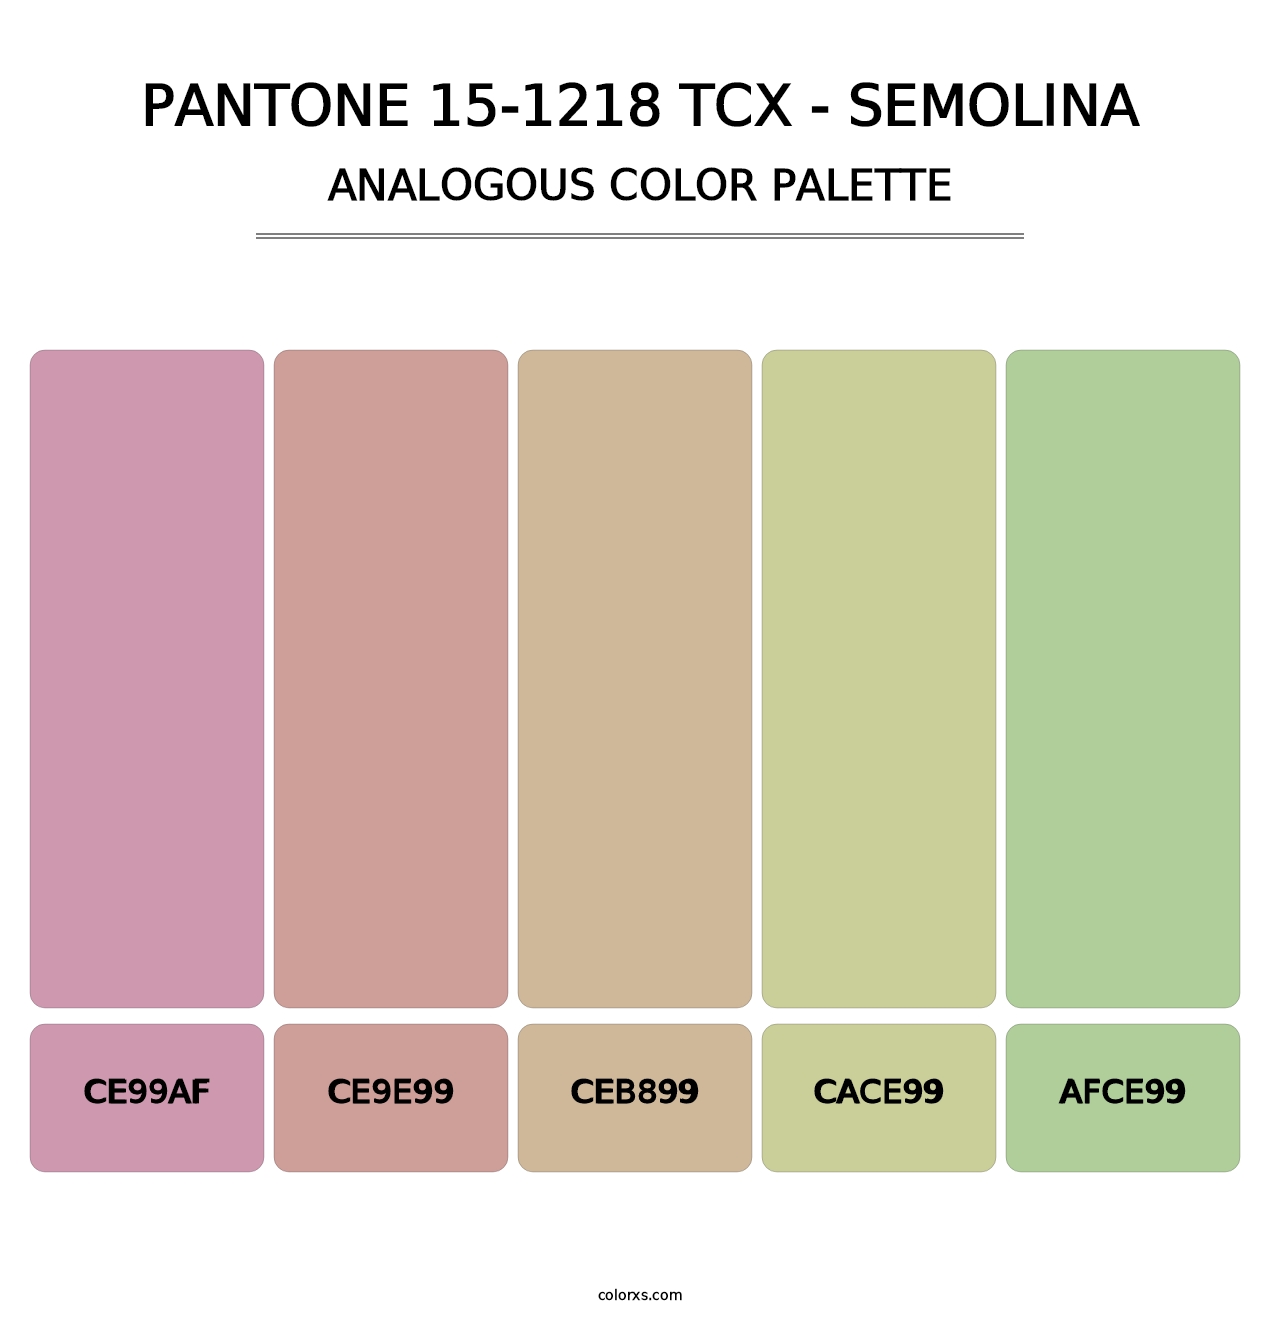 PANTONE 15-1218 TCX - Semolina - Analogous Color Palette